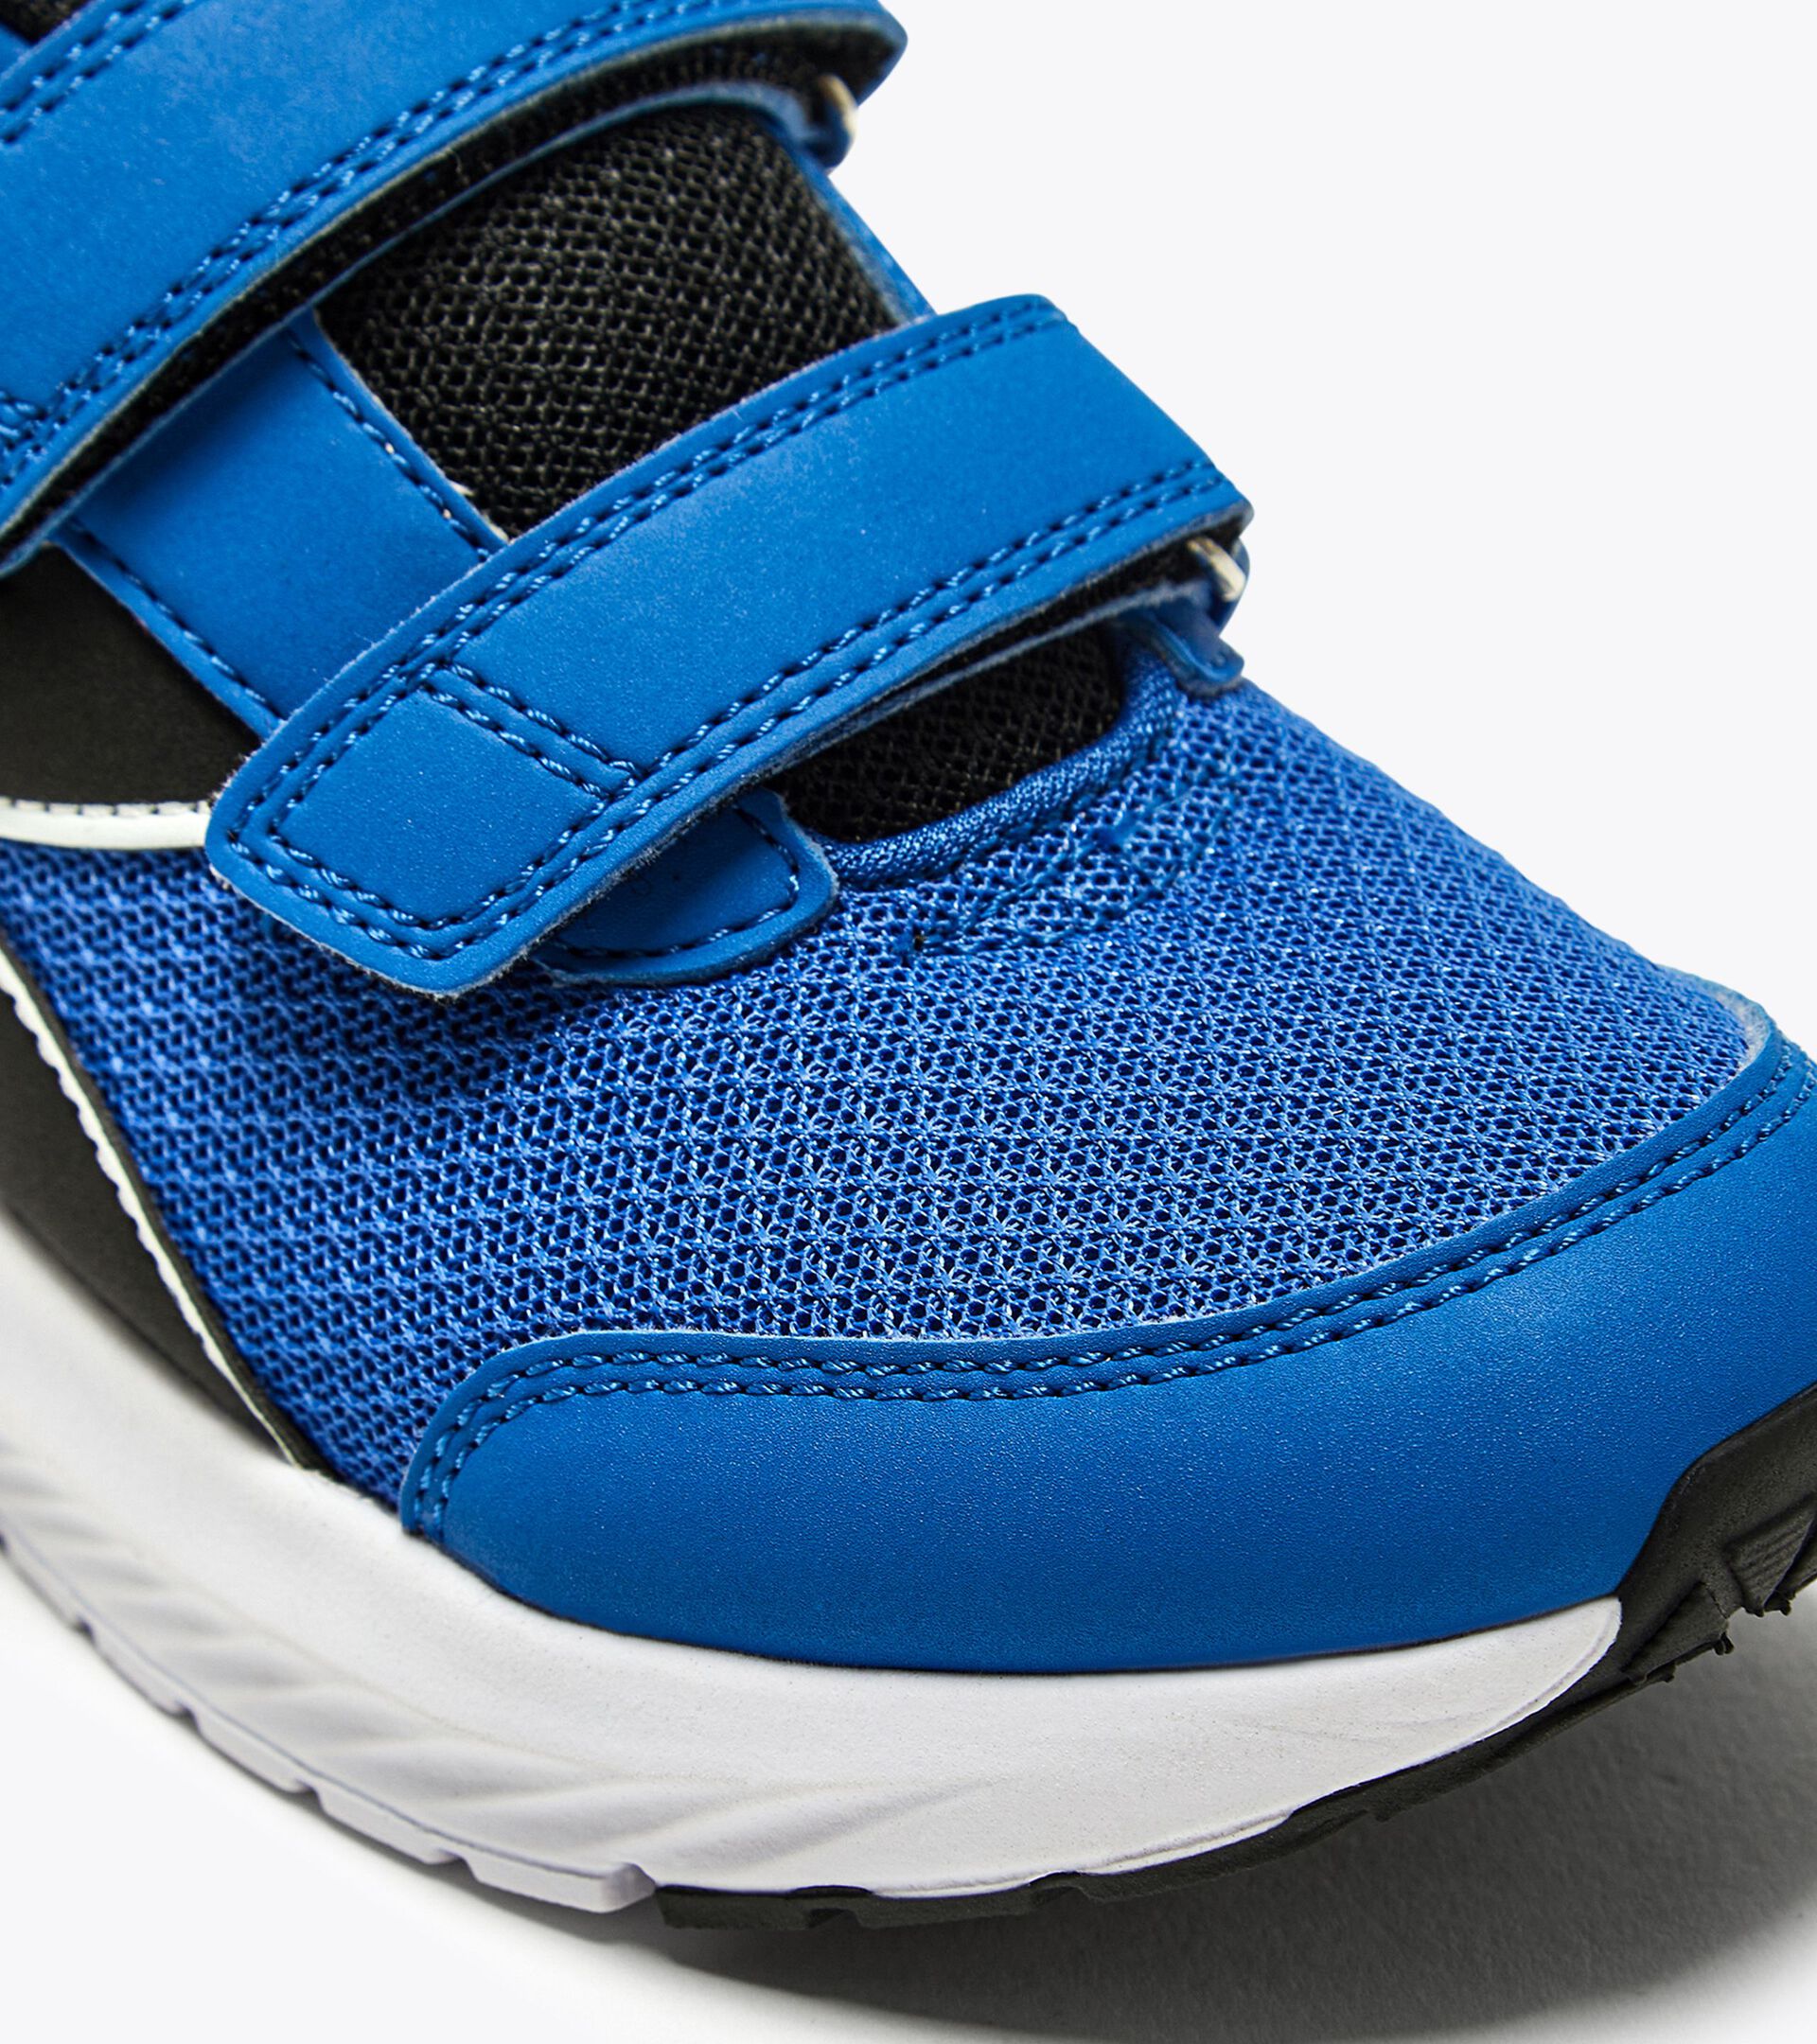 Junior running shoes - Gender Neutral FALCON 3 JR V PRINCESS BLUE/BLACK - Diadora